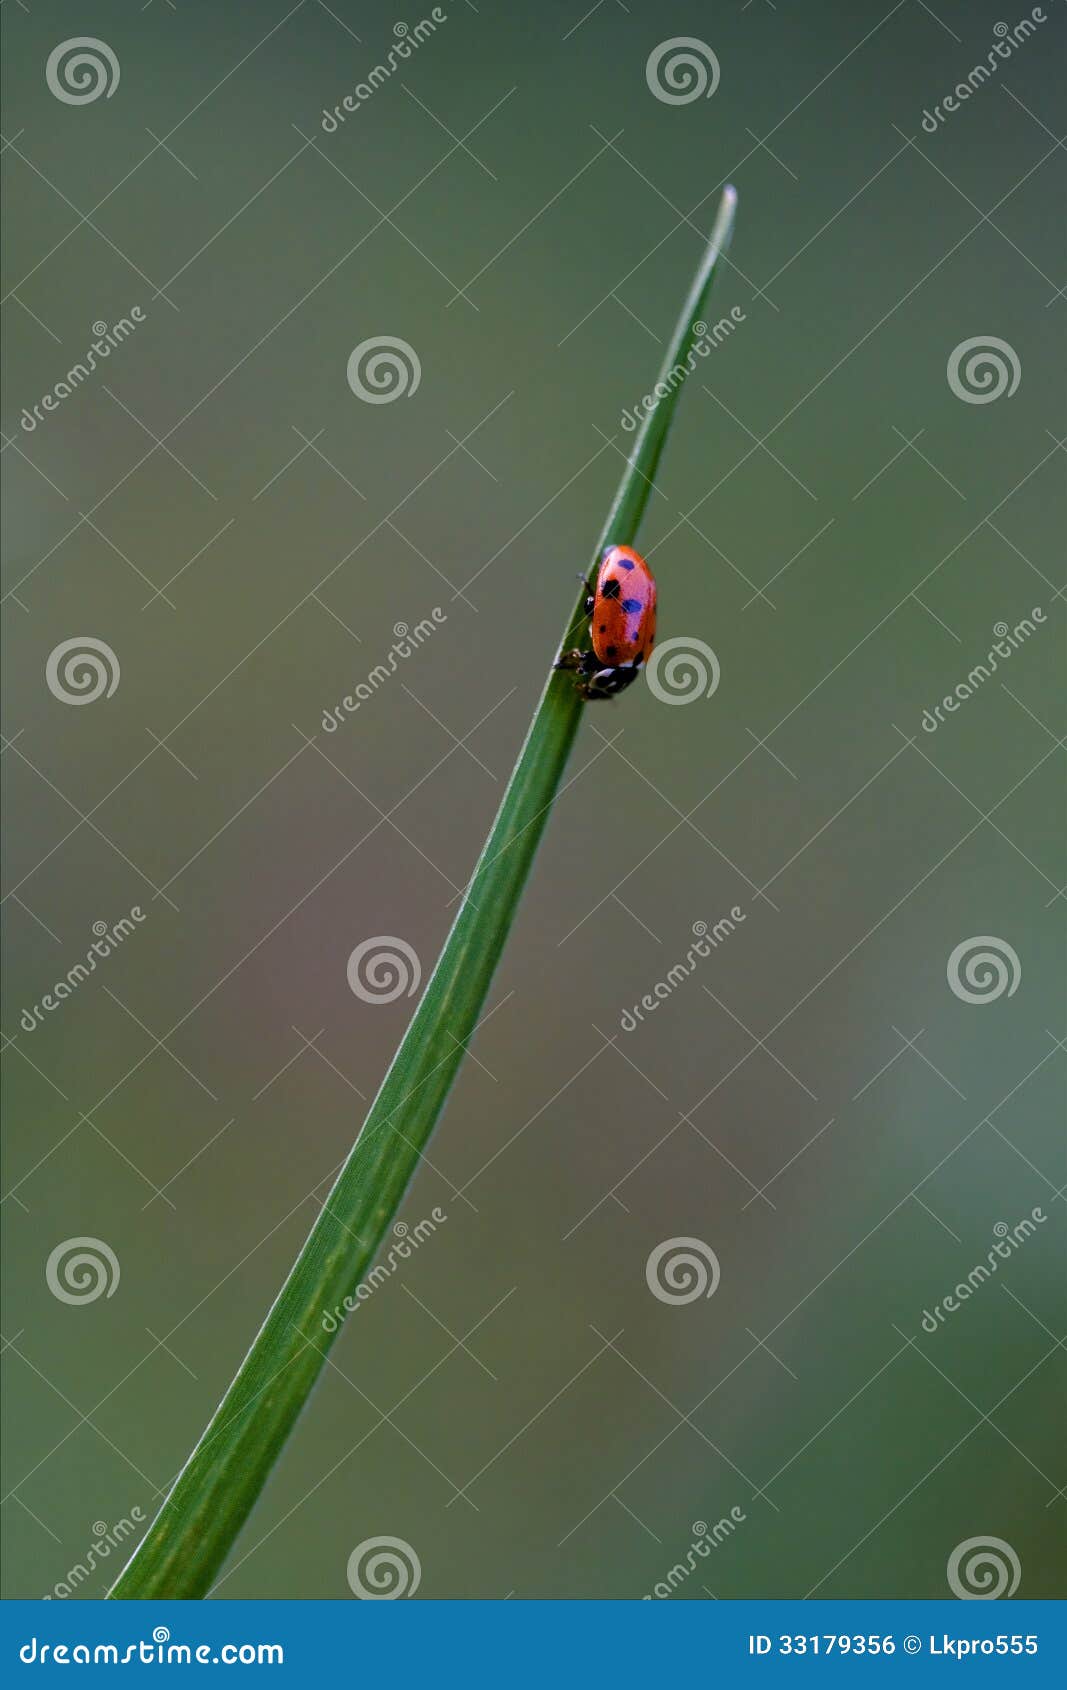 ocellata coleoptera on a grass